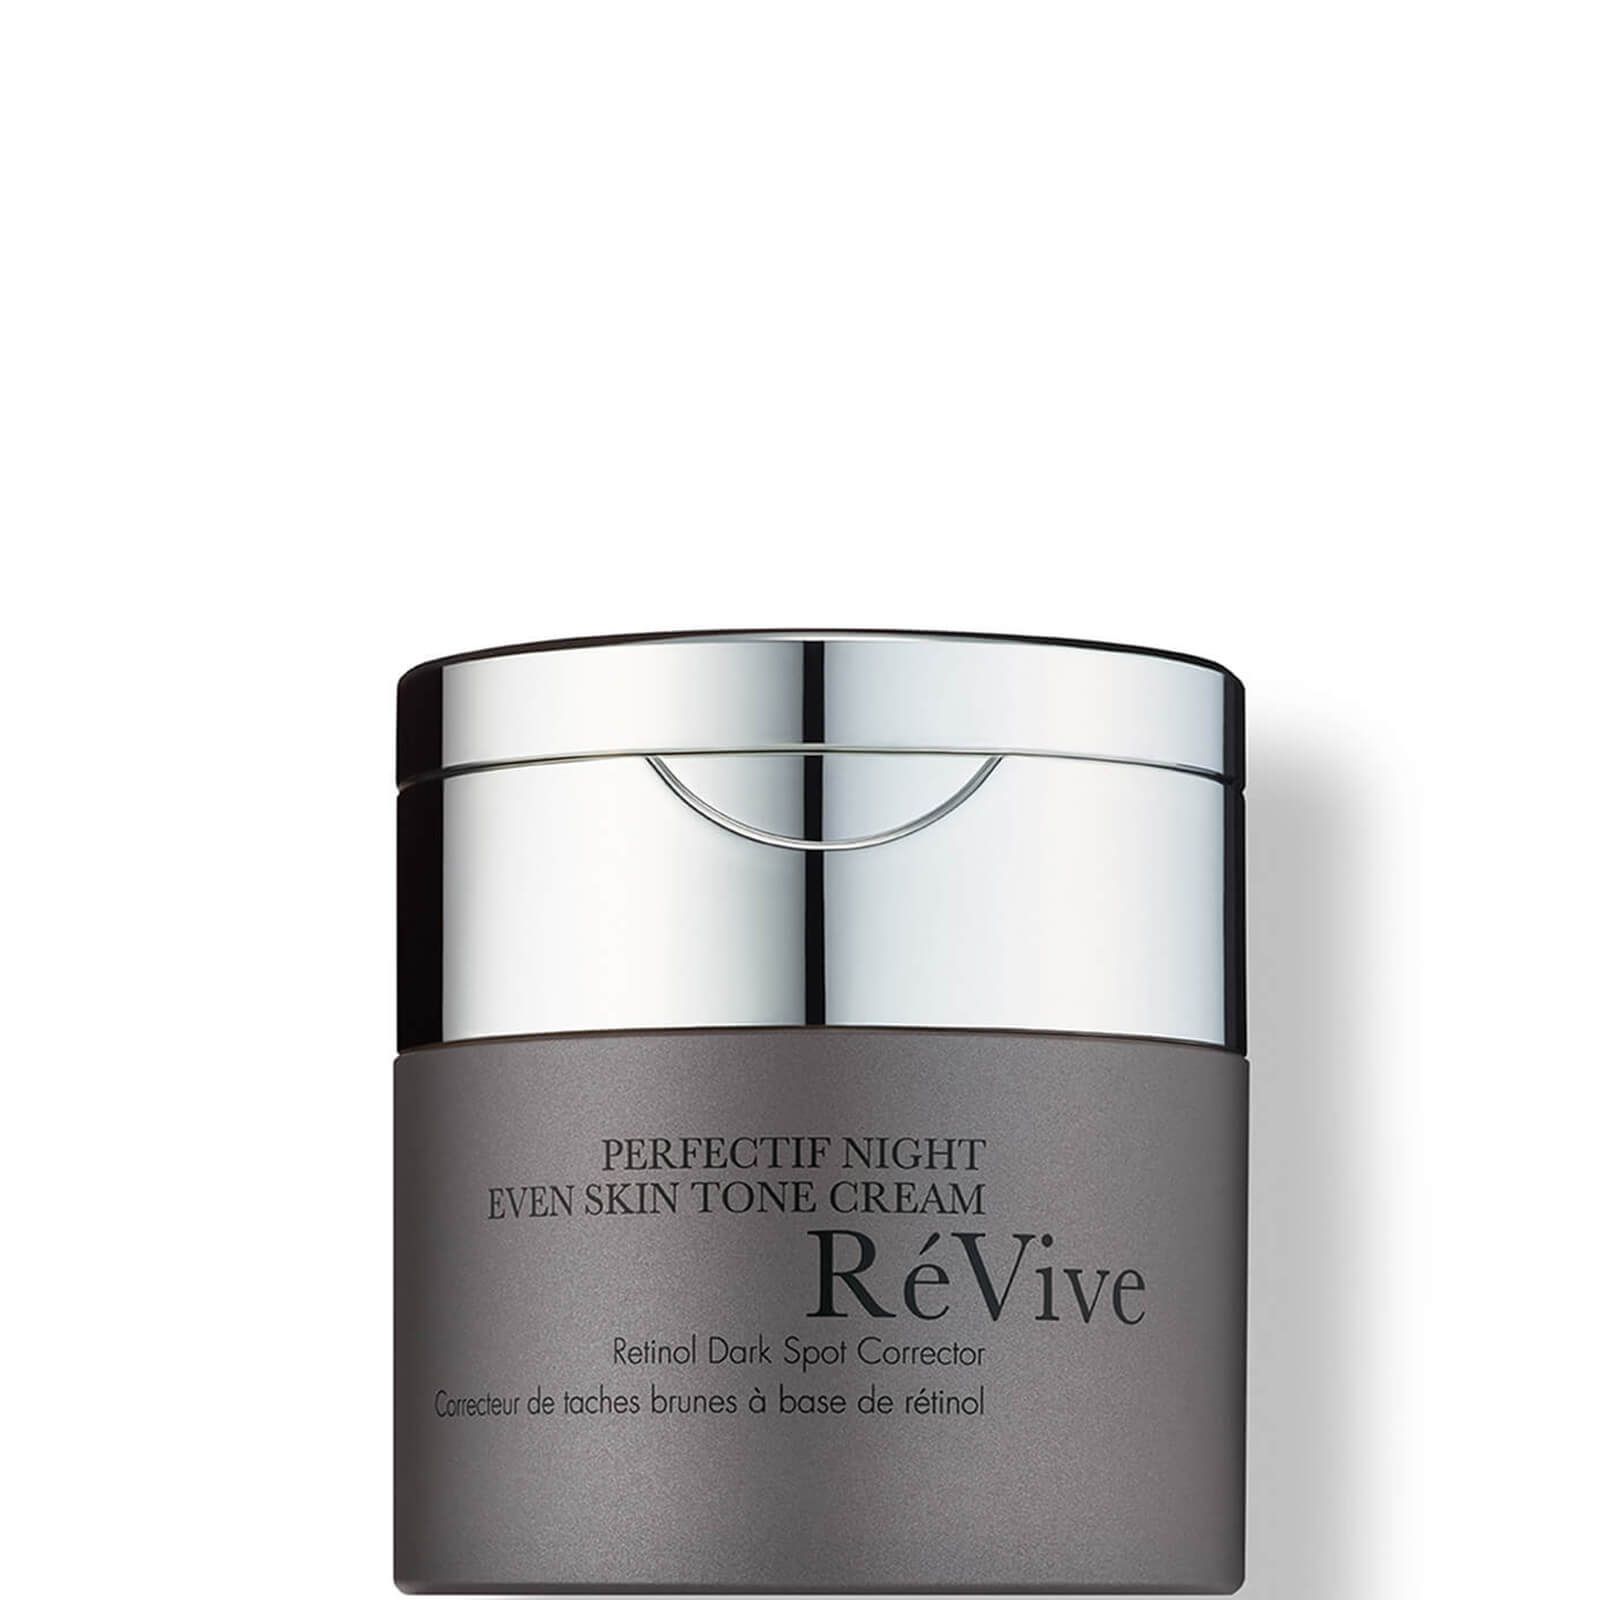 Image of RéVive Perfectif Night Retinol Dark Spot Corrector Even Skin Tone Cream 50ml